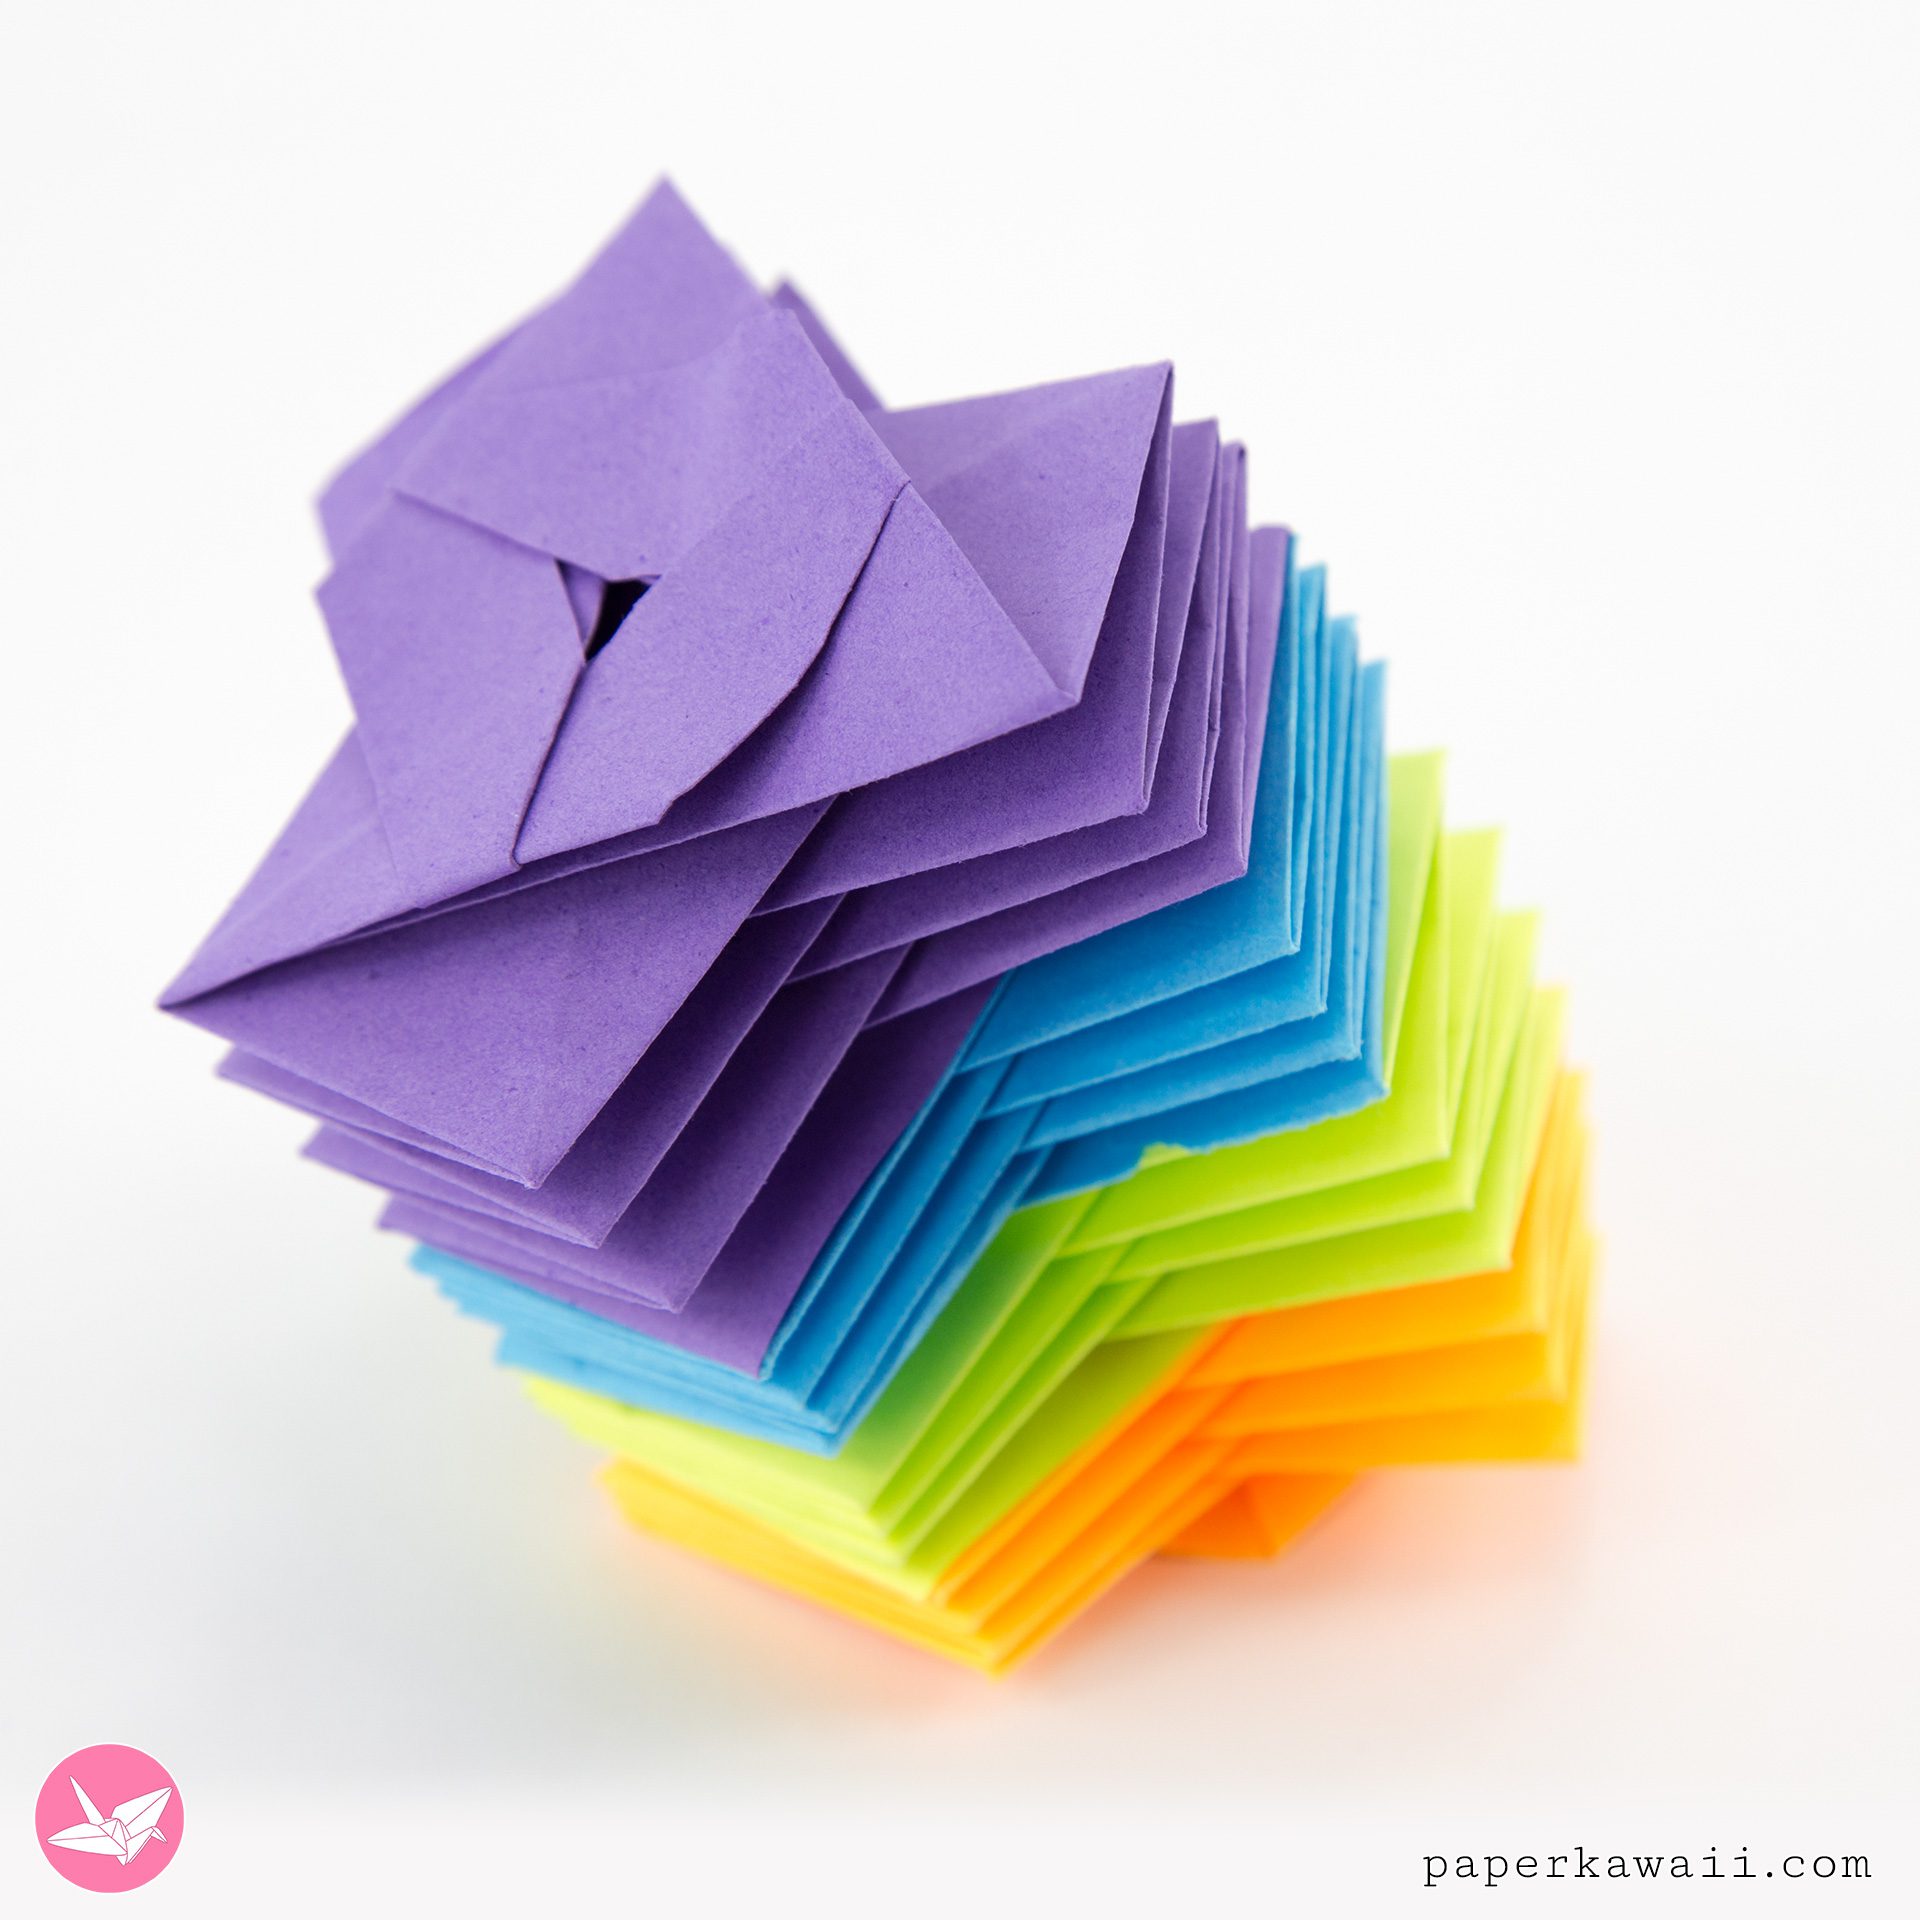 Magic Origami Spring Toy Paper Kawaii 08